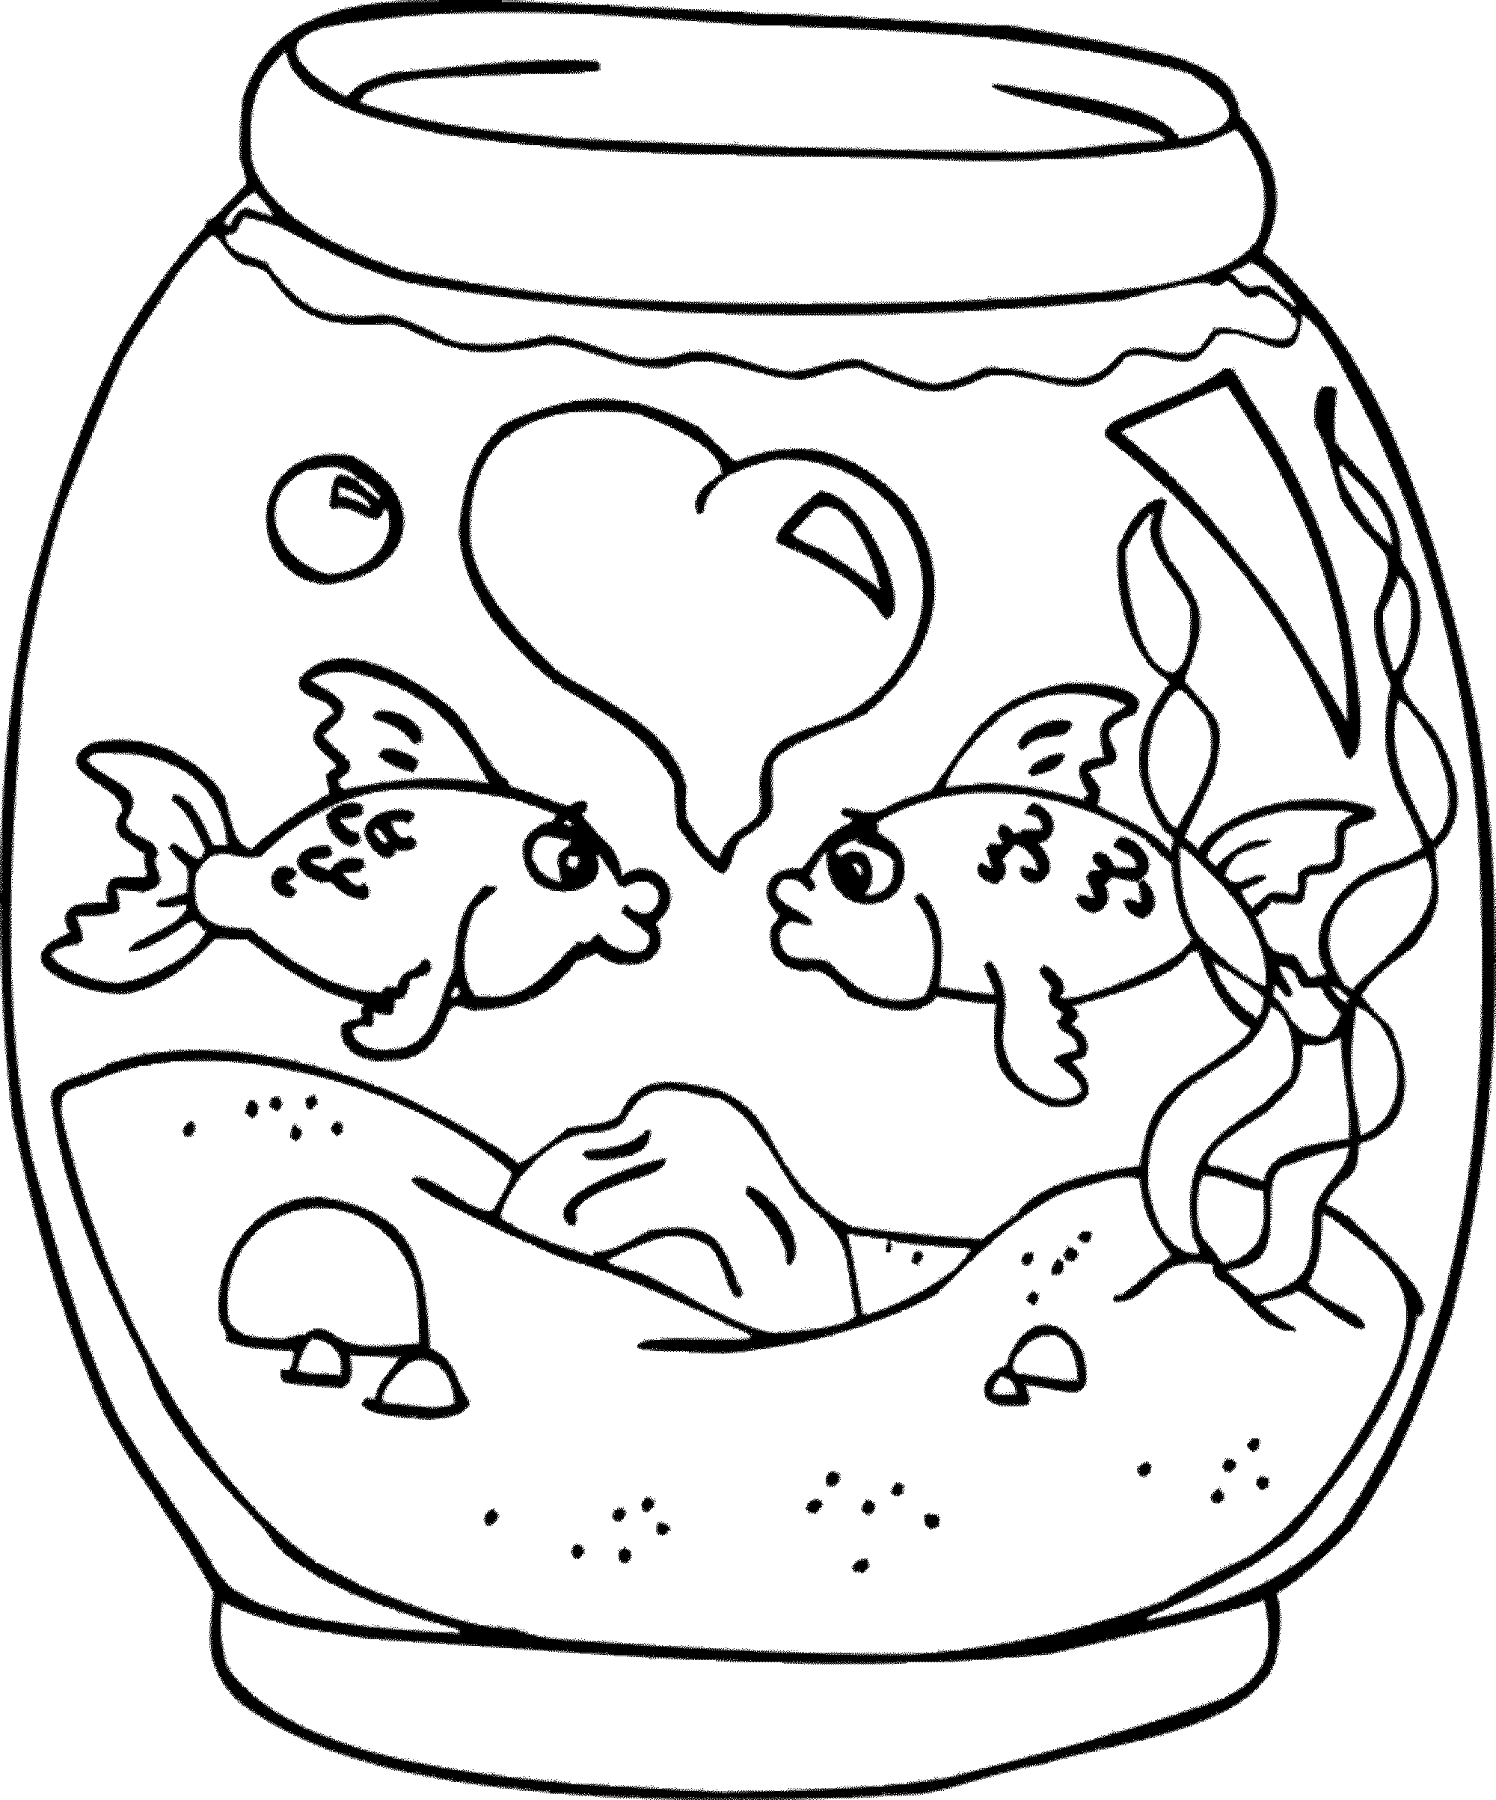 Fish Tank coloring, Download Fish Tank coloring for free 2019